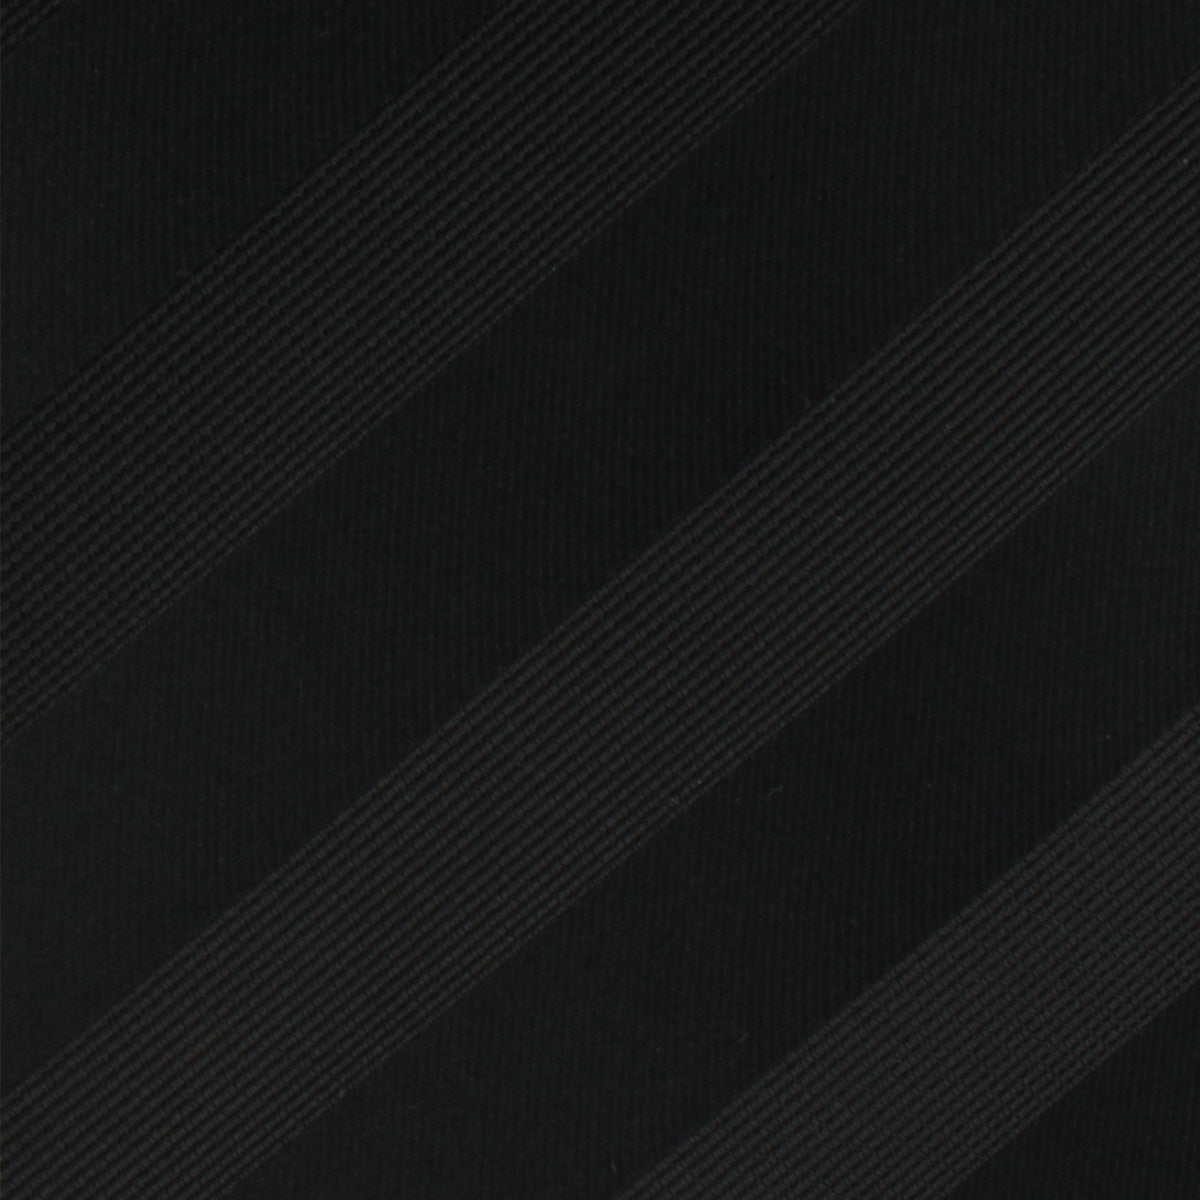 Sinatra Black Striped Fabric Swatch